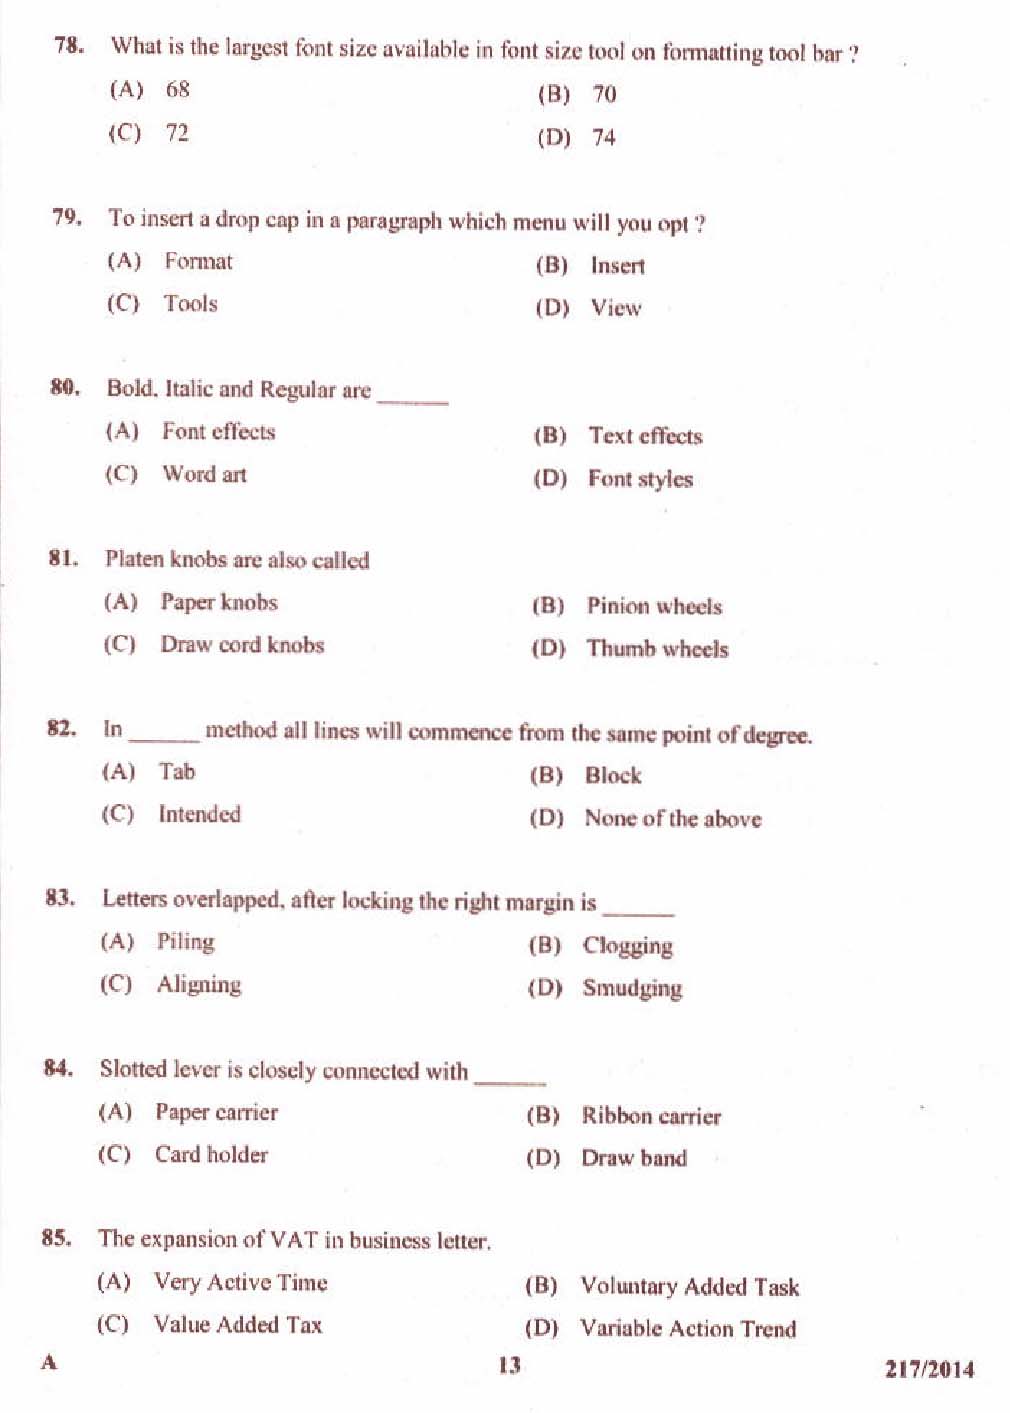 Kerala PSC Stenographer Exam 2014 Question Paper Code 2172014 13